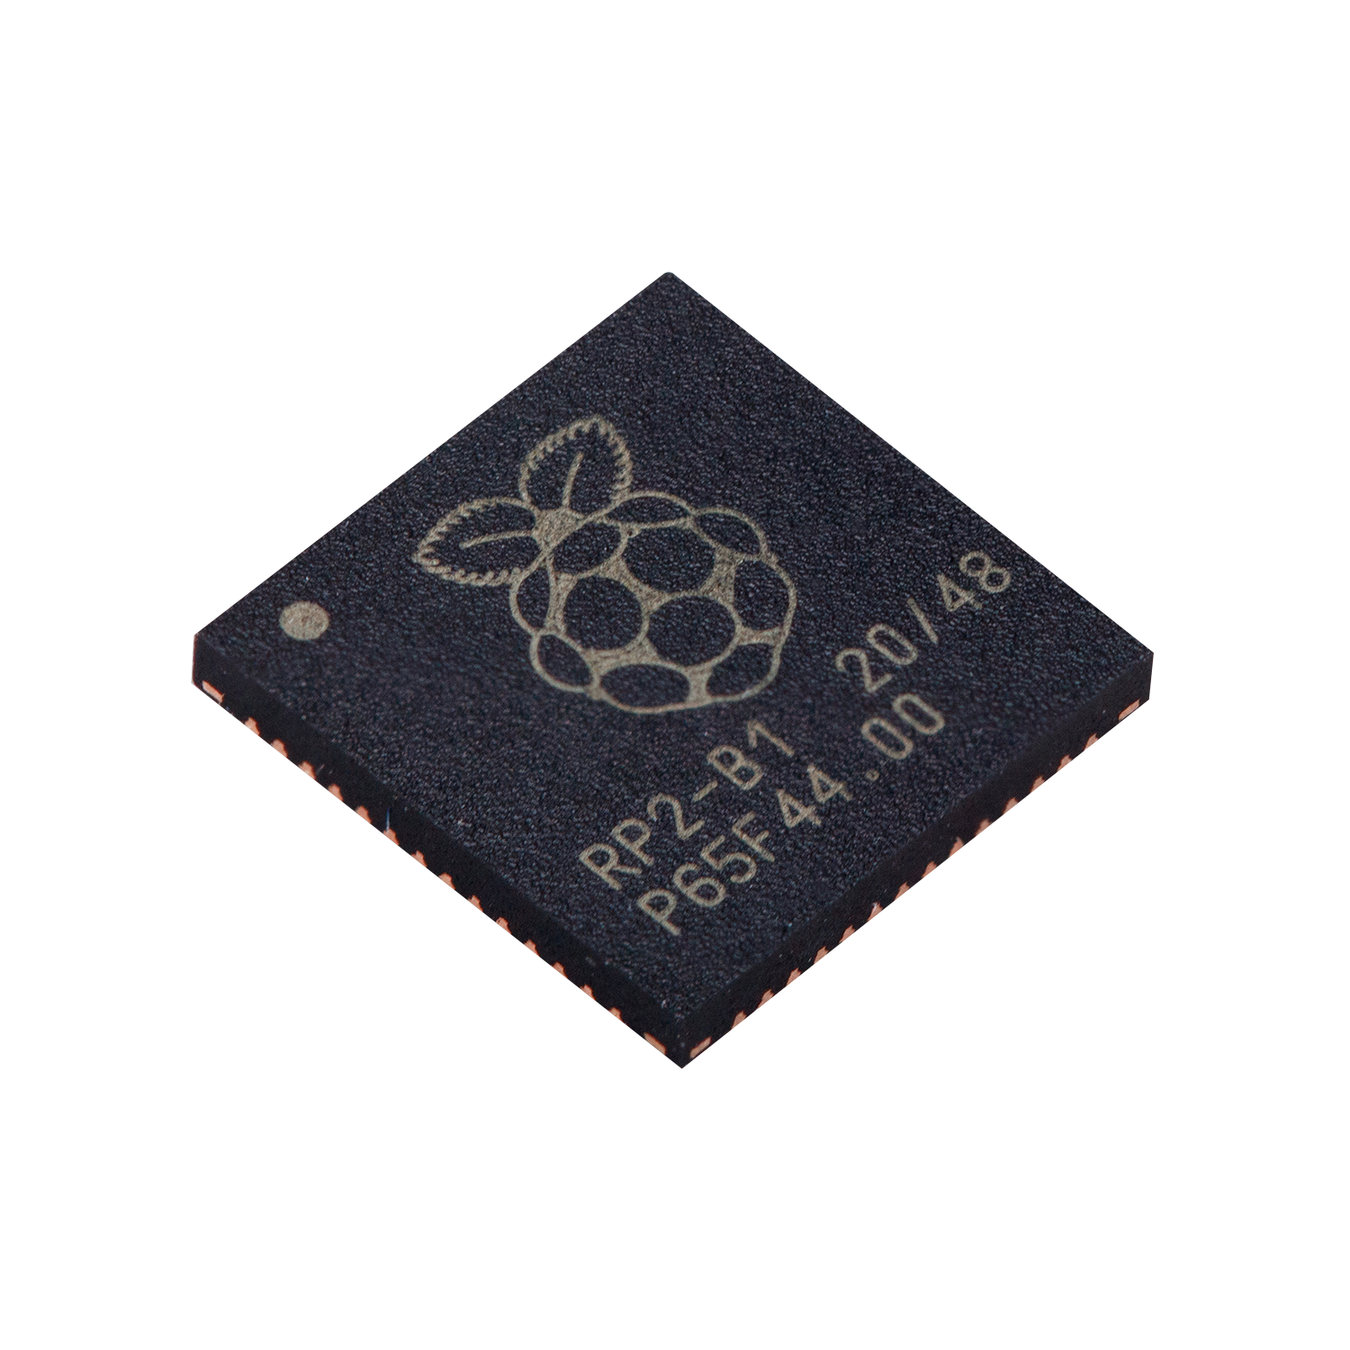 Raspberry Pi Silicon - Pico